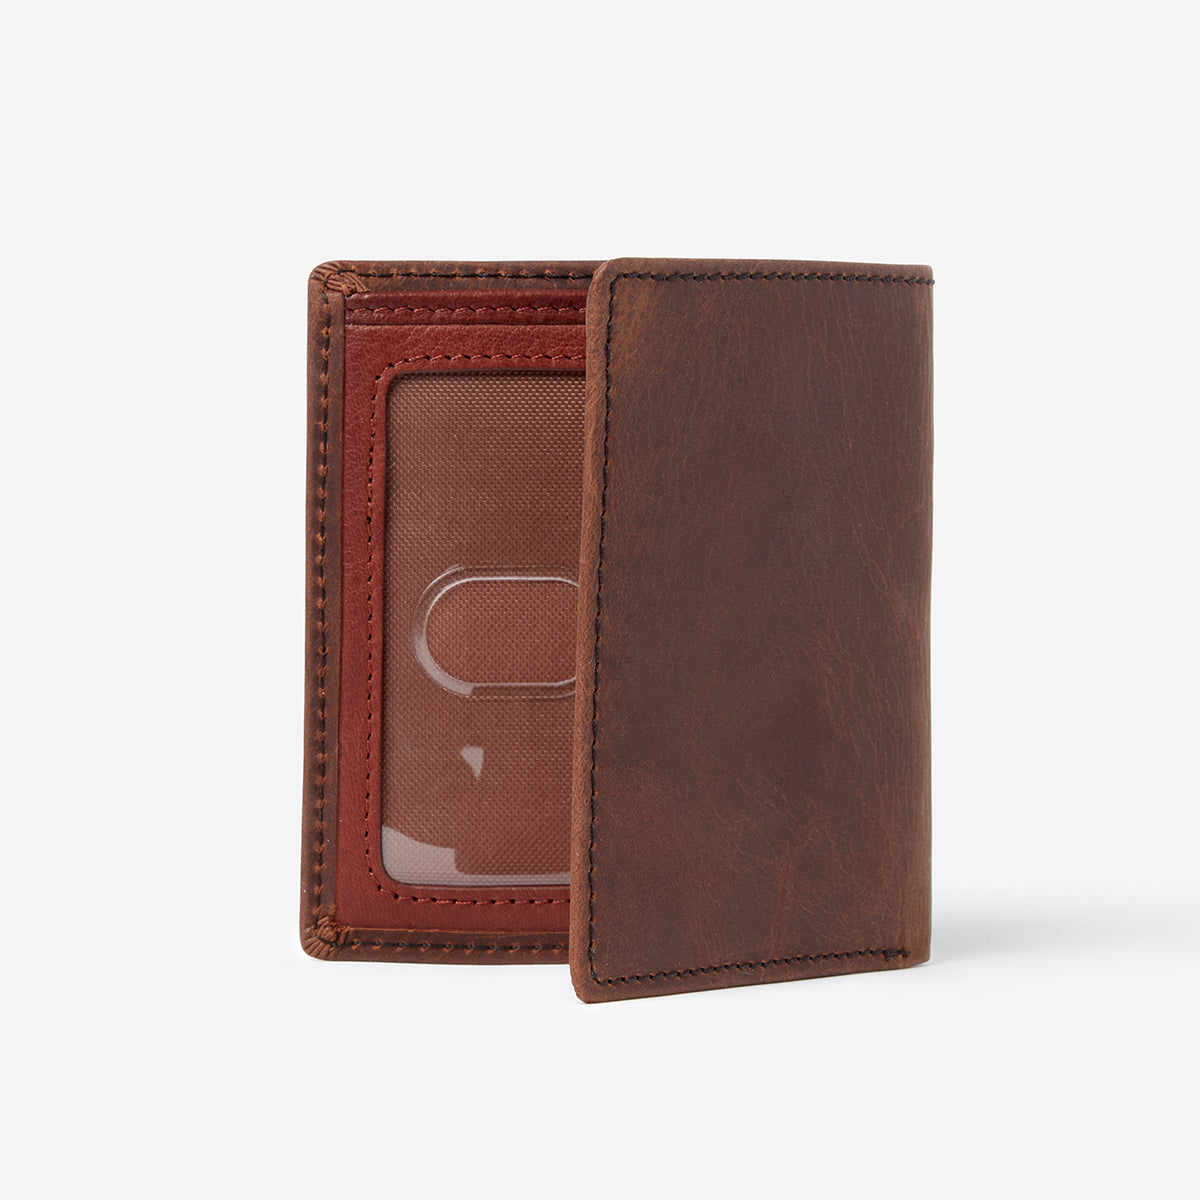 RFID Bi-fold Wallet